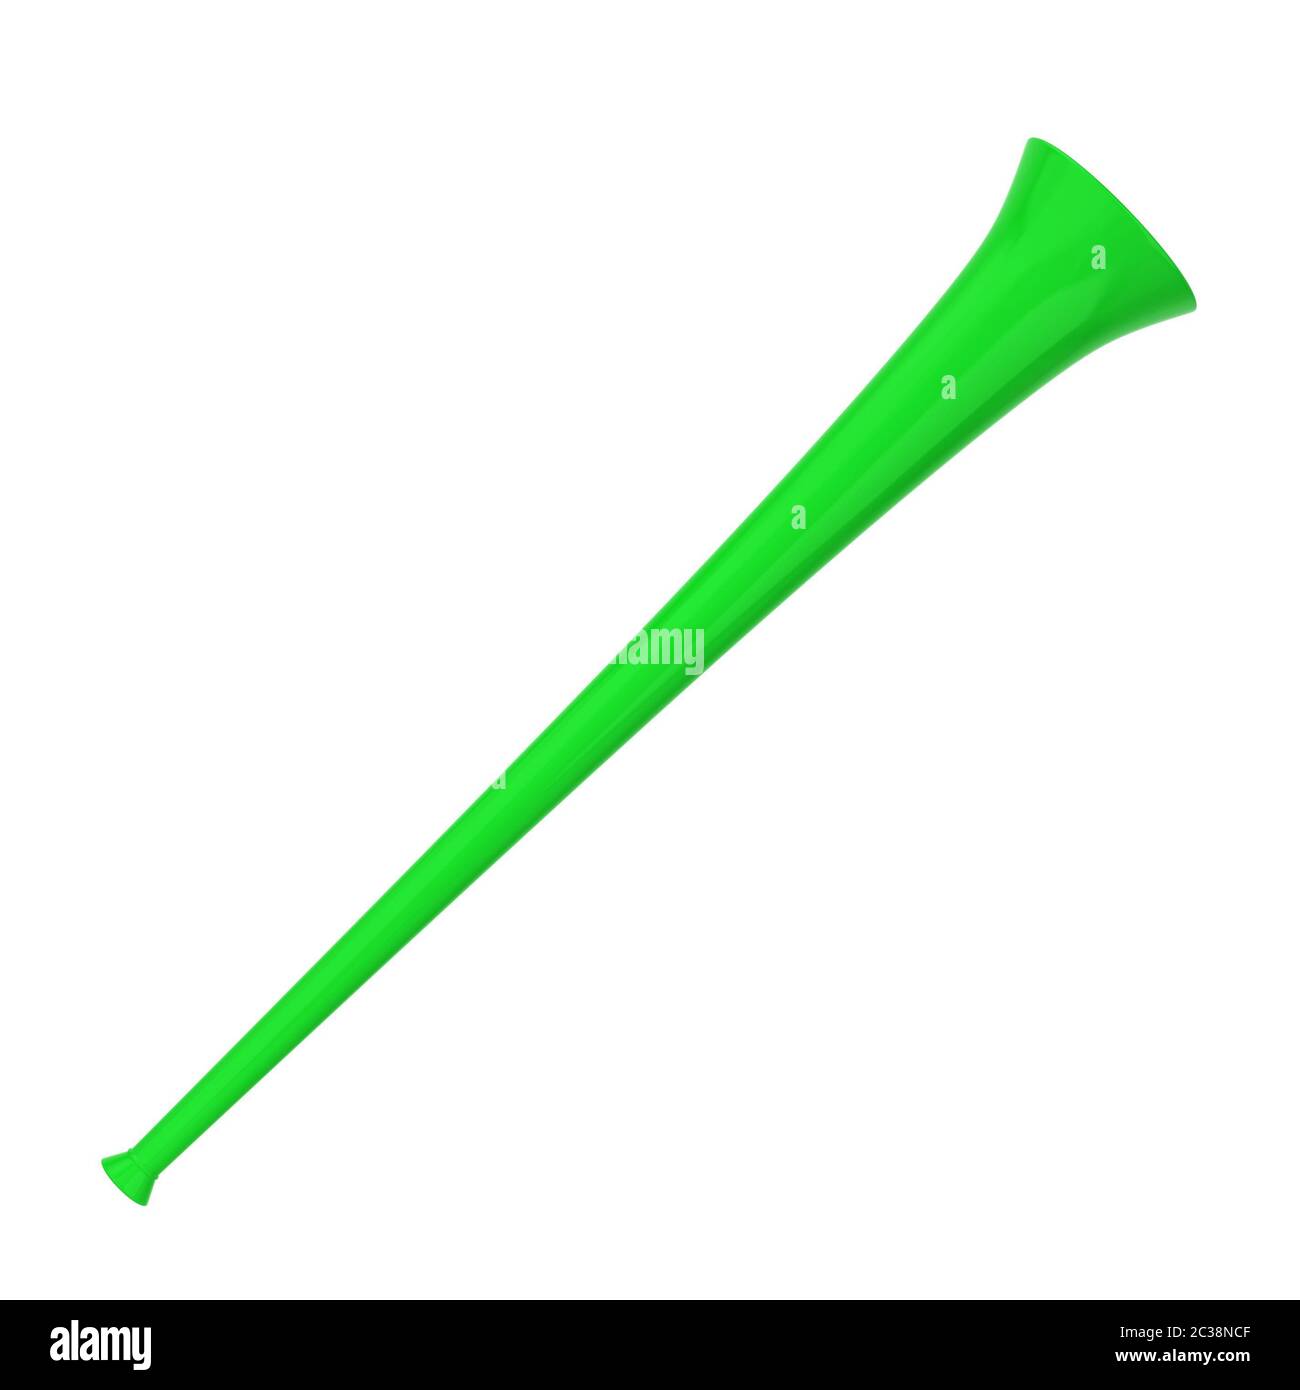 Fan vuvuzela trumpet. 3d illustration isolated on white background Stock Photo